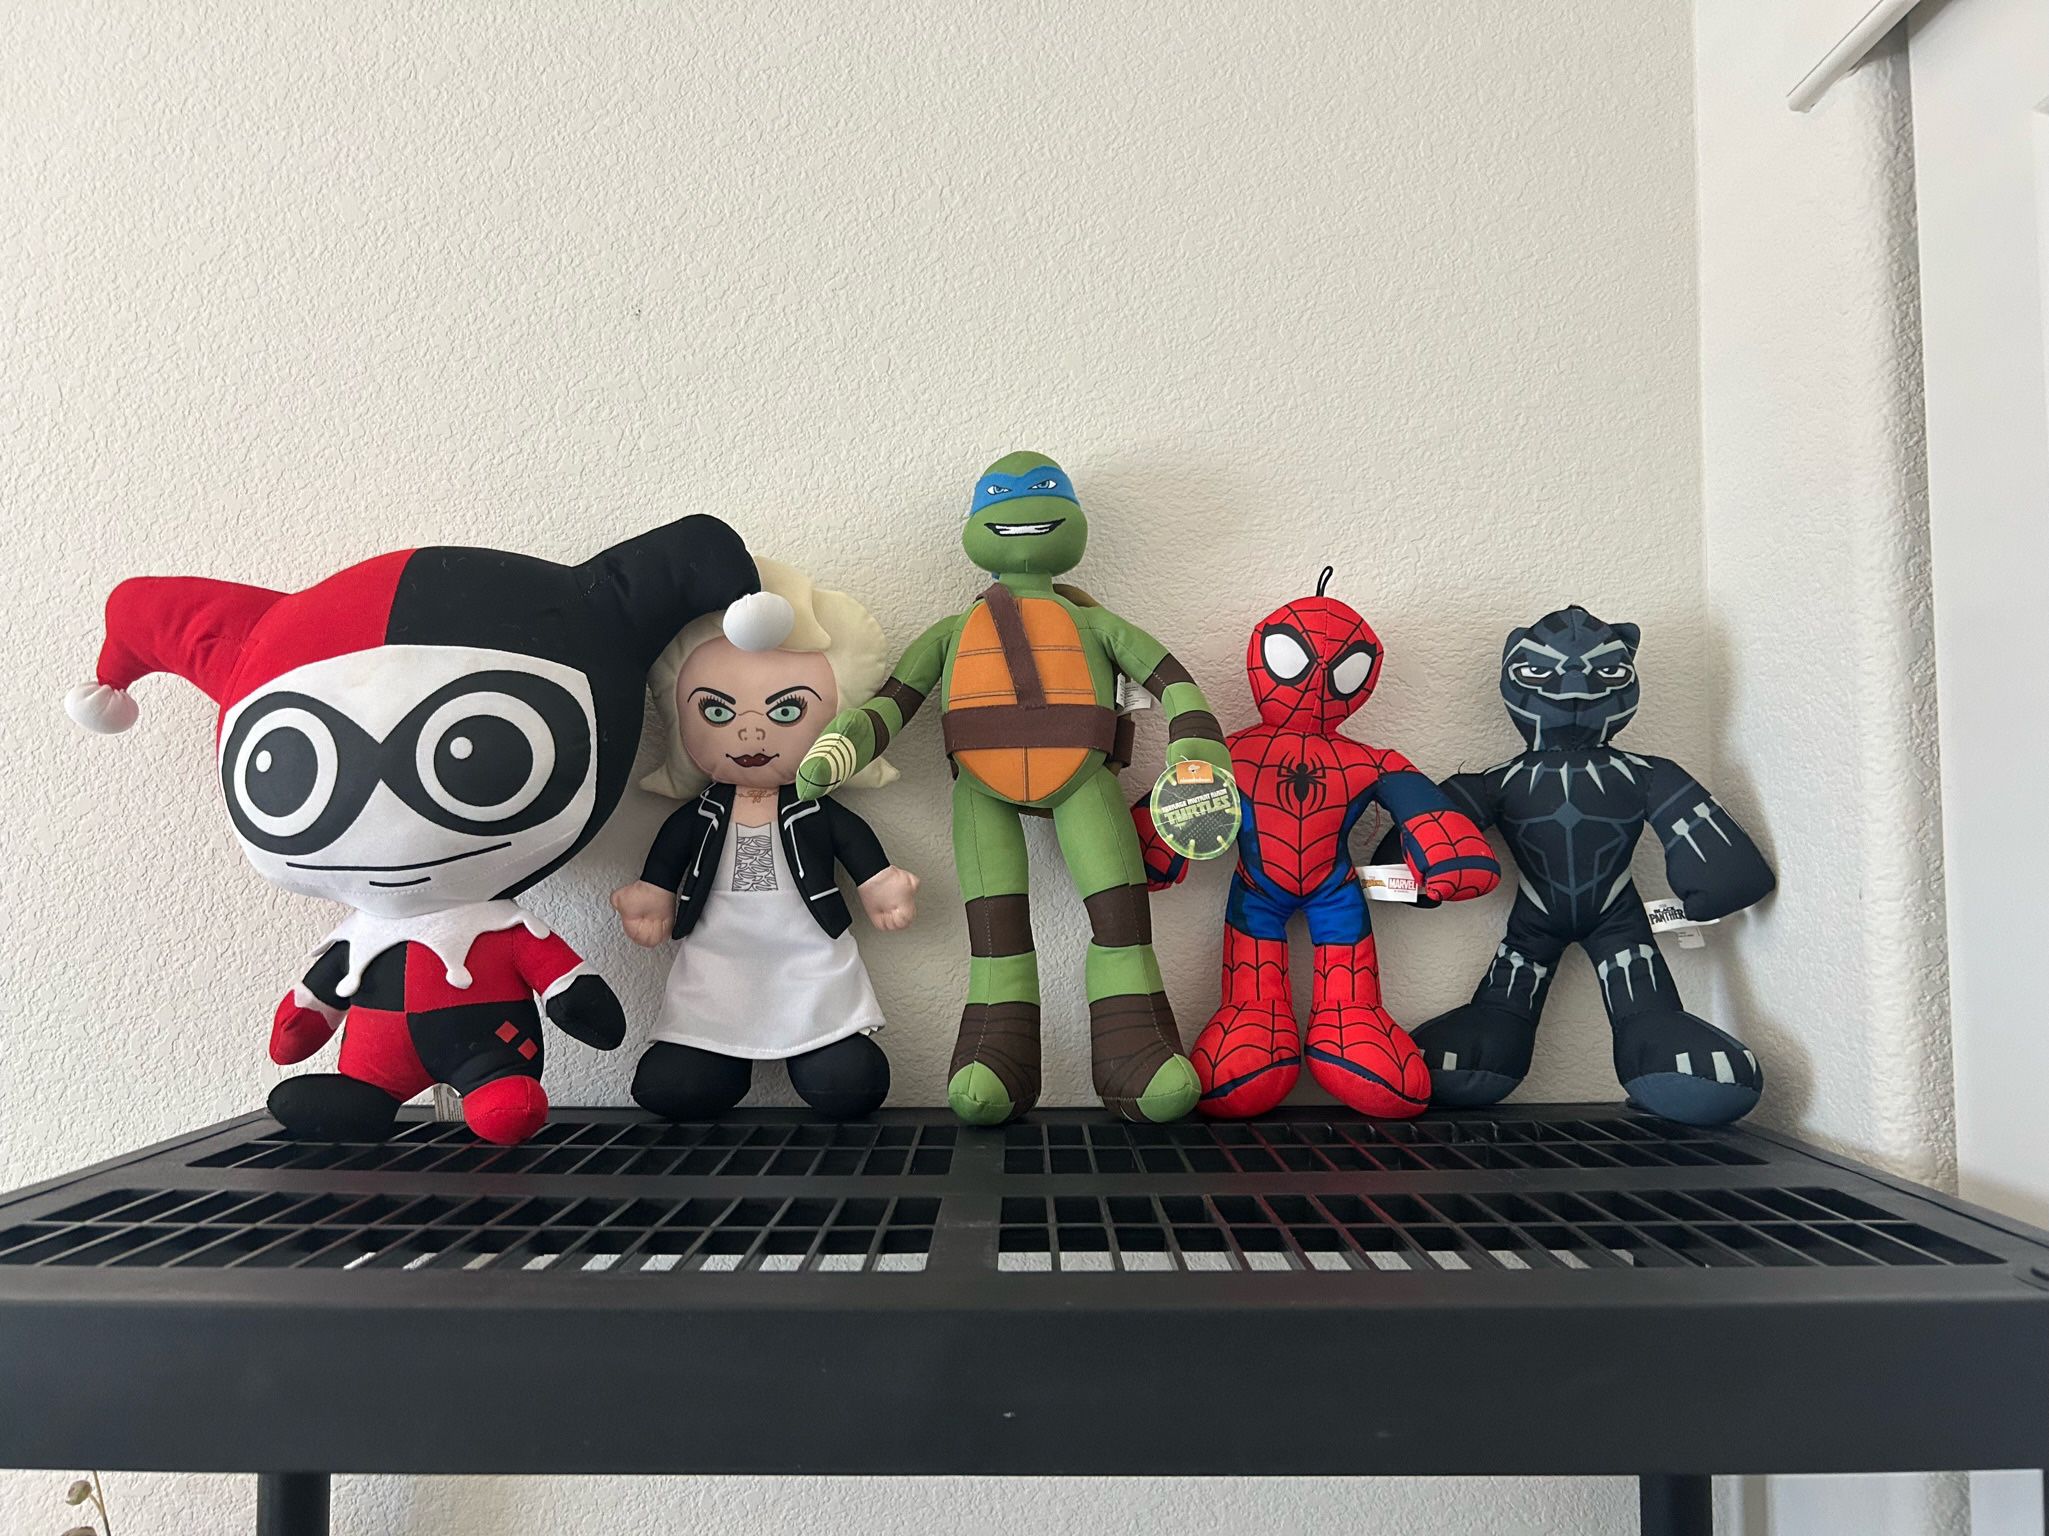 Plushy Set (Spider-Man, Black Panther, Ninja Turtle, Harlequin & Tiffany Plush Toy Dolls) $15 for all